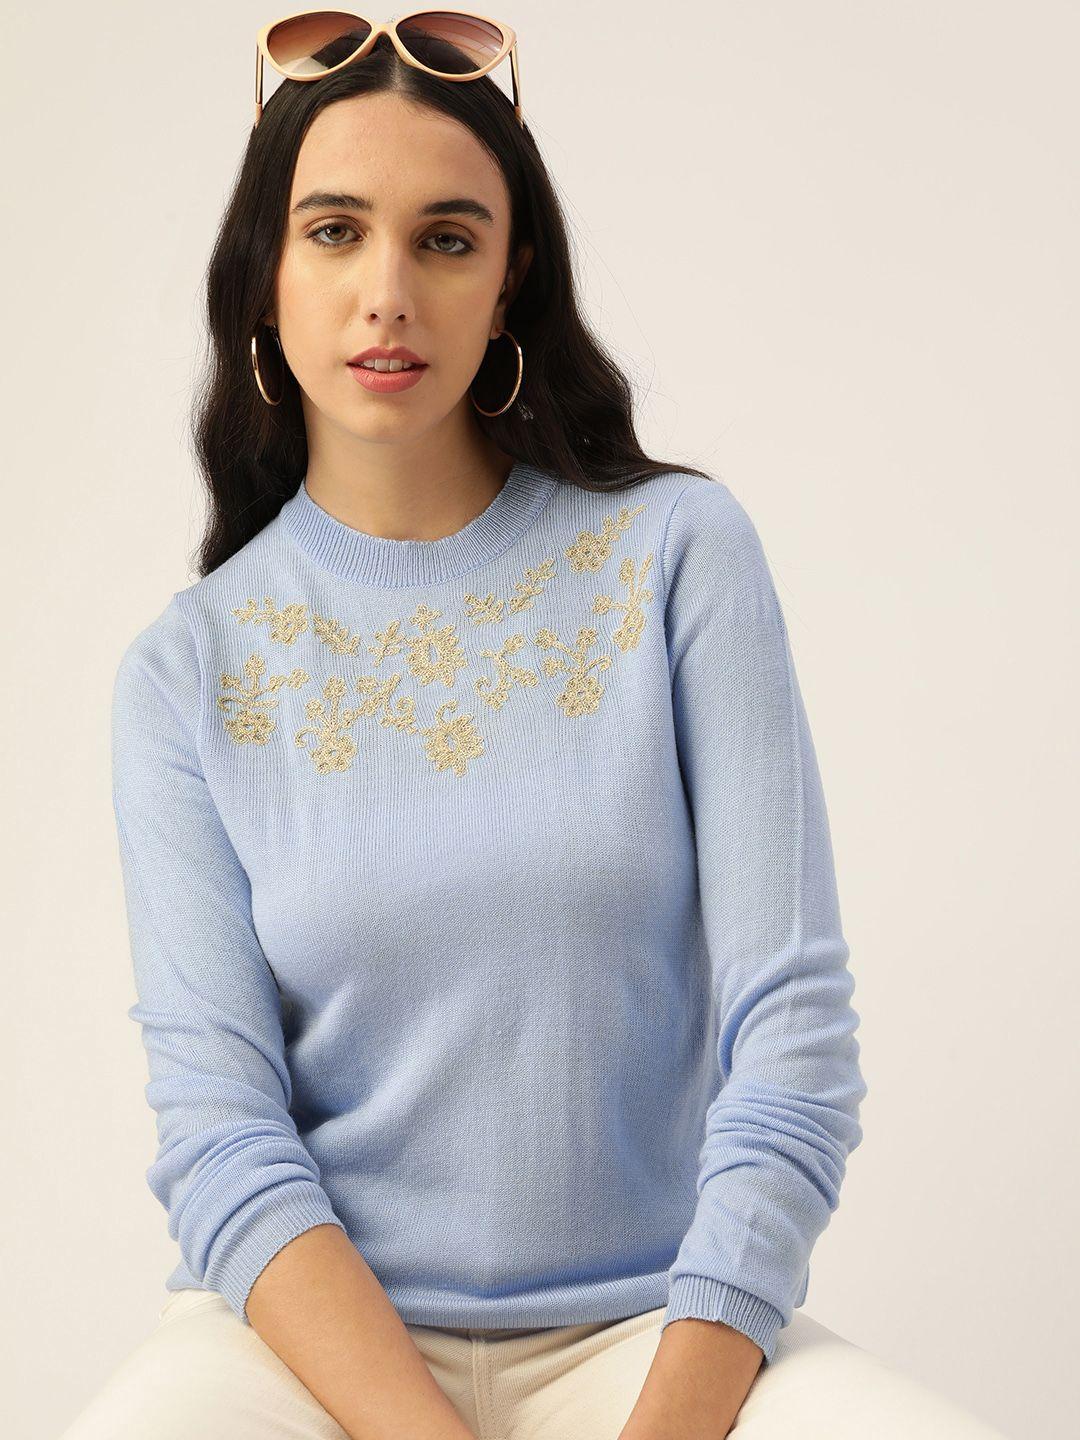 dressberry women blue & golden floral embroidered pullover